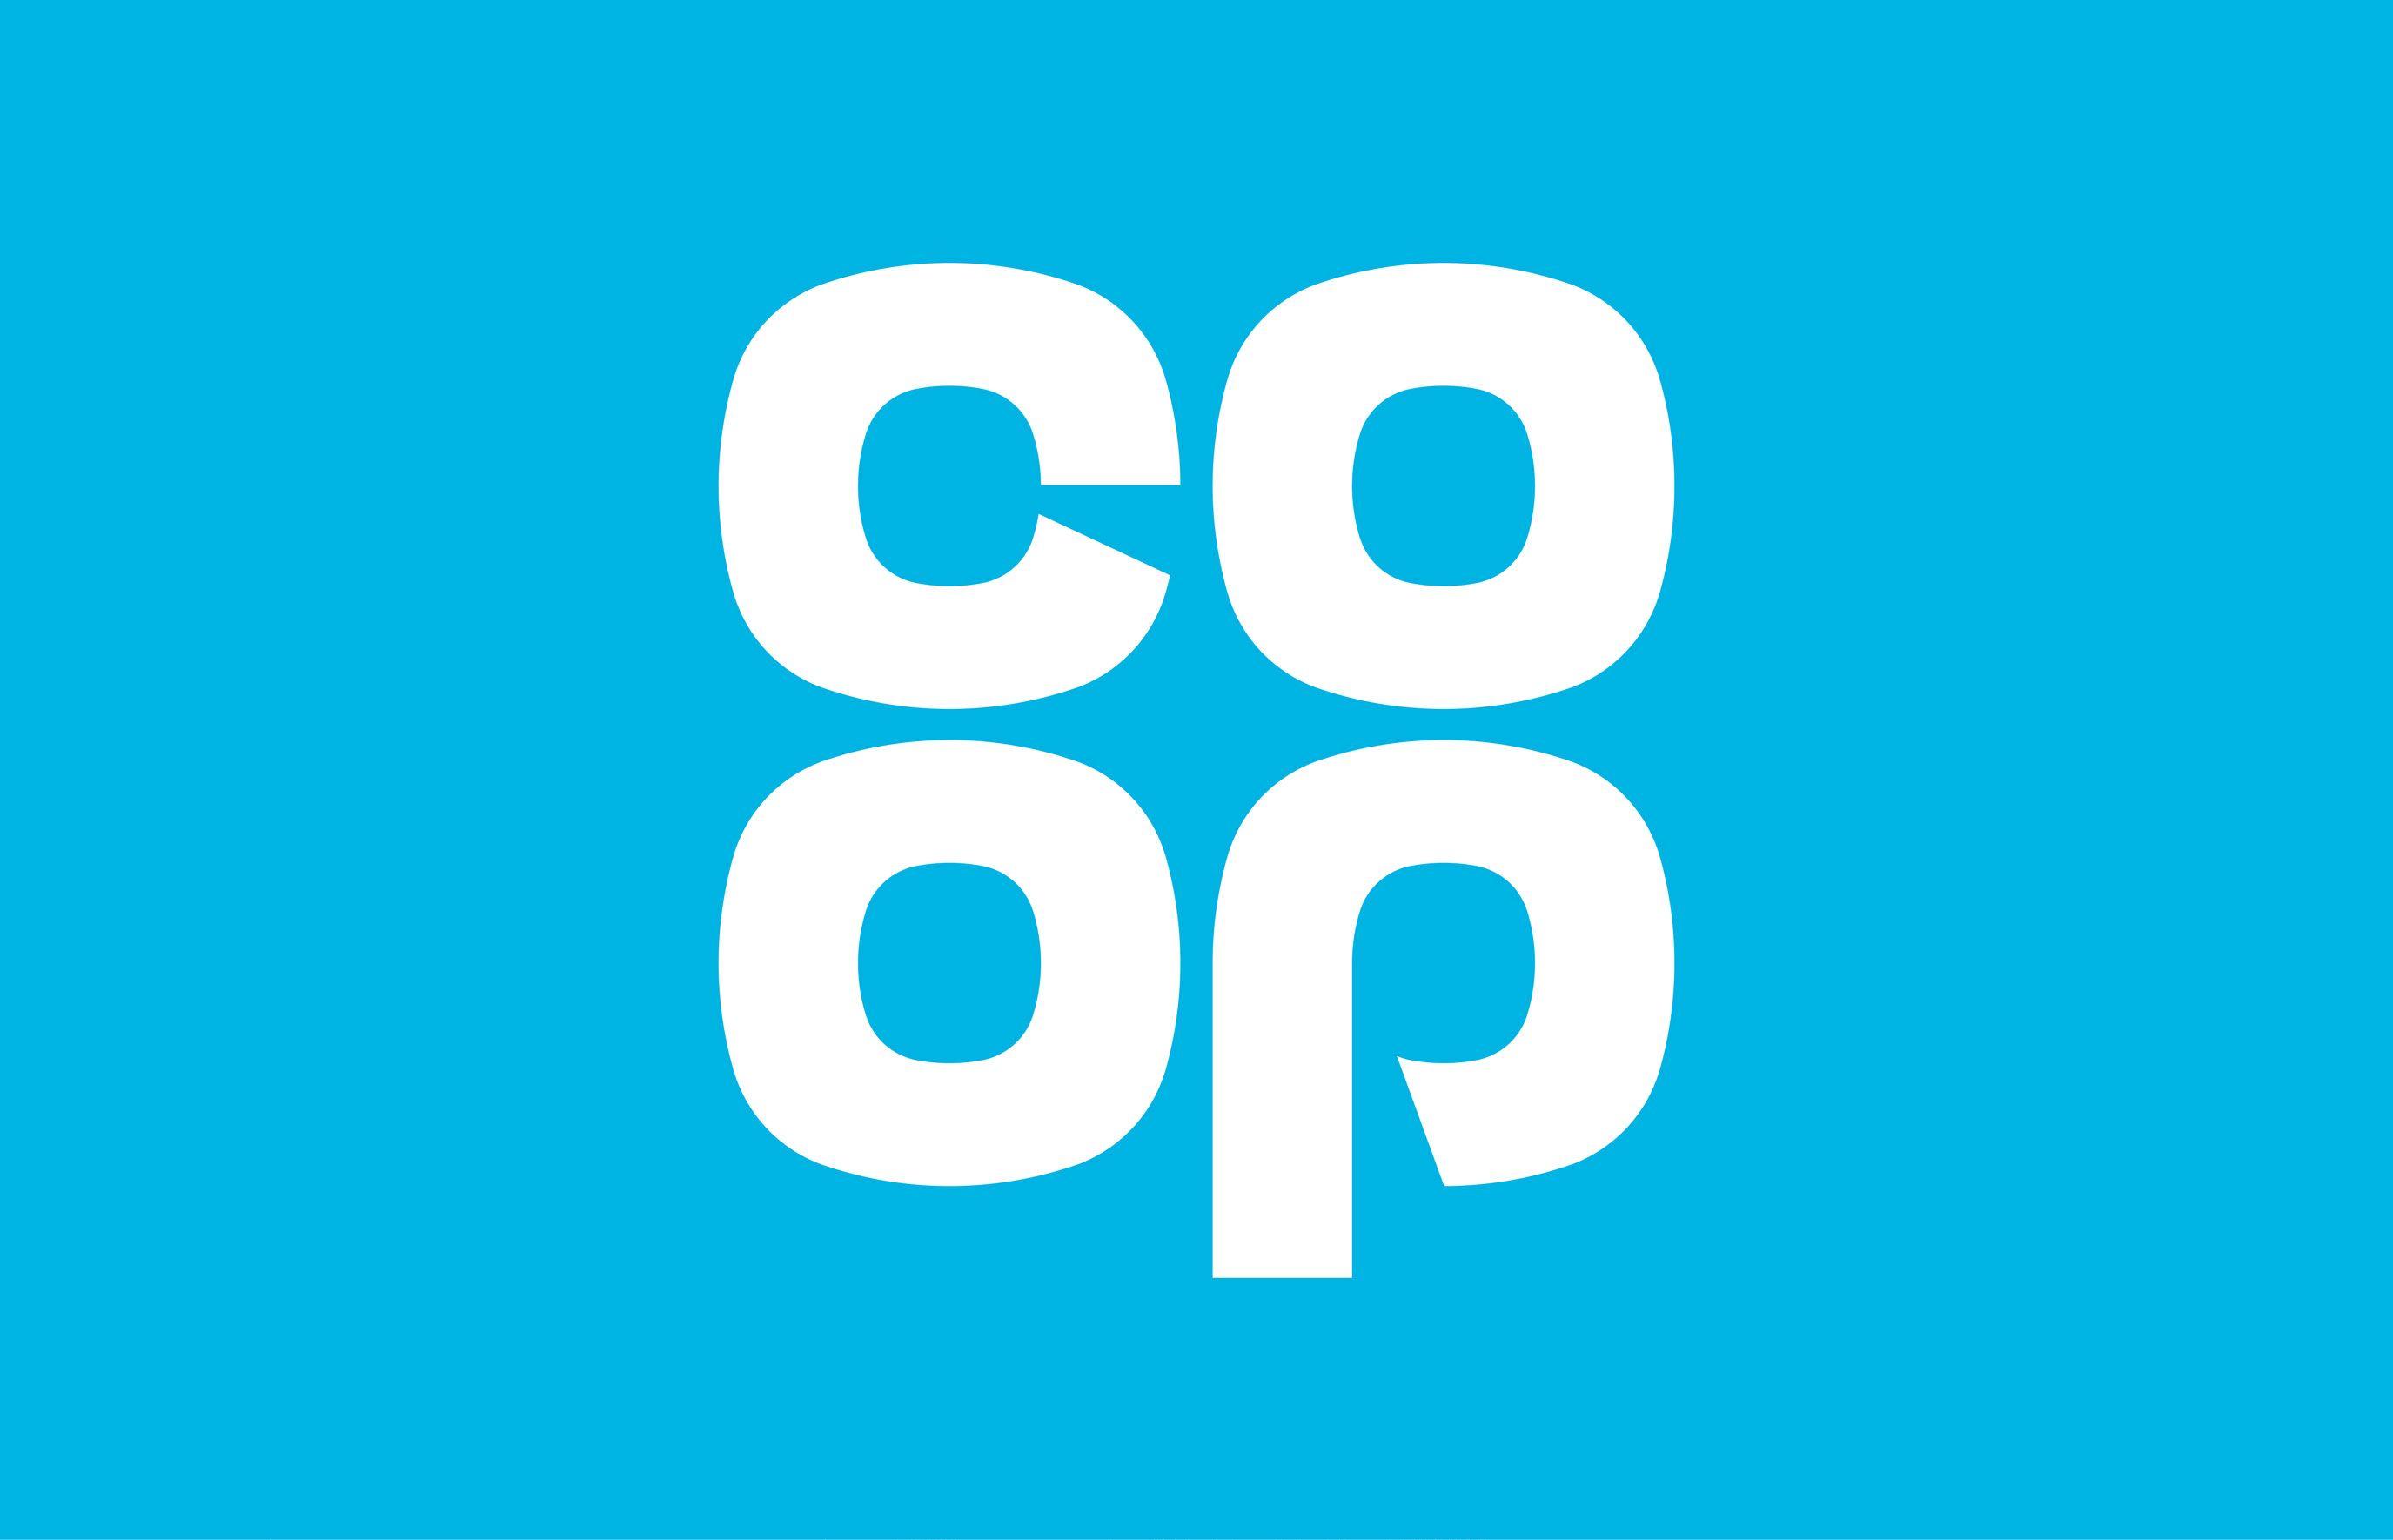 Blue and Green Food Logo - Co-op restructures, rebrands and revives 1968 logo – Design Week